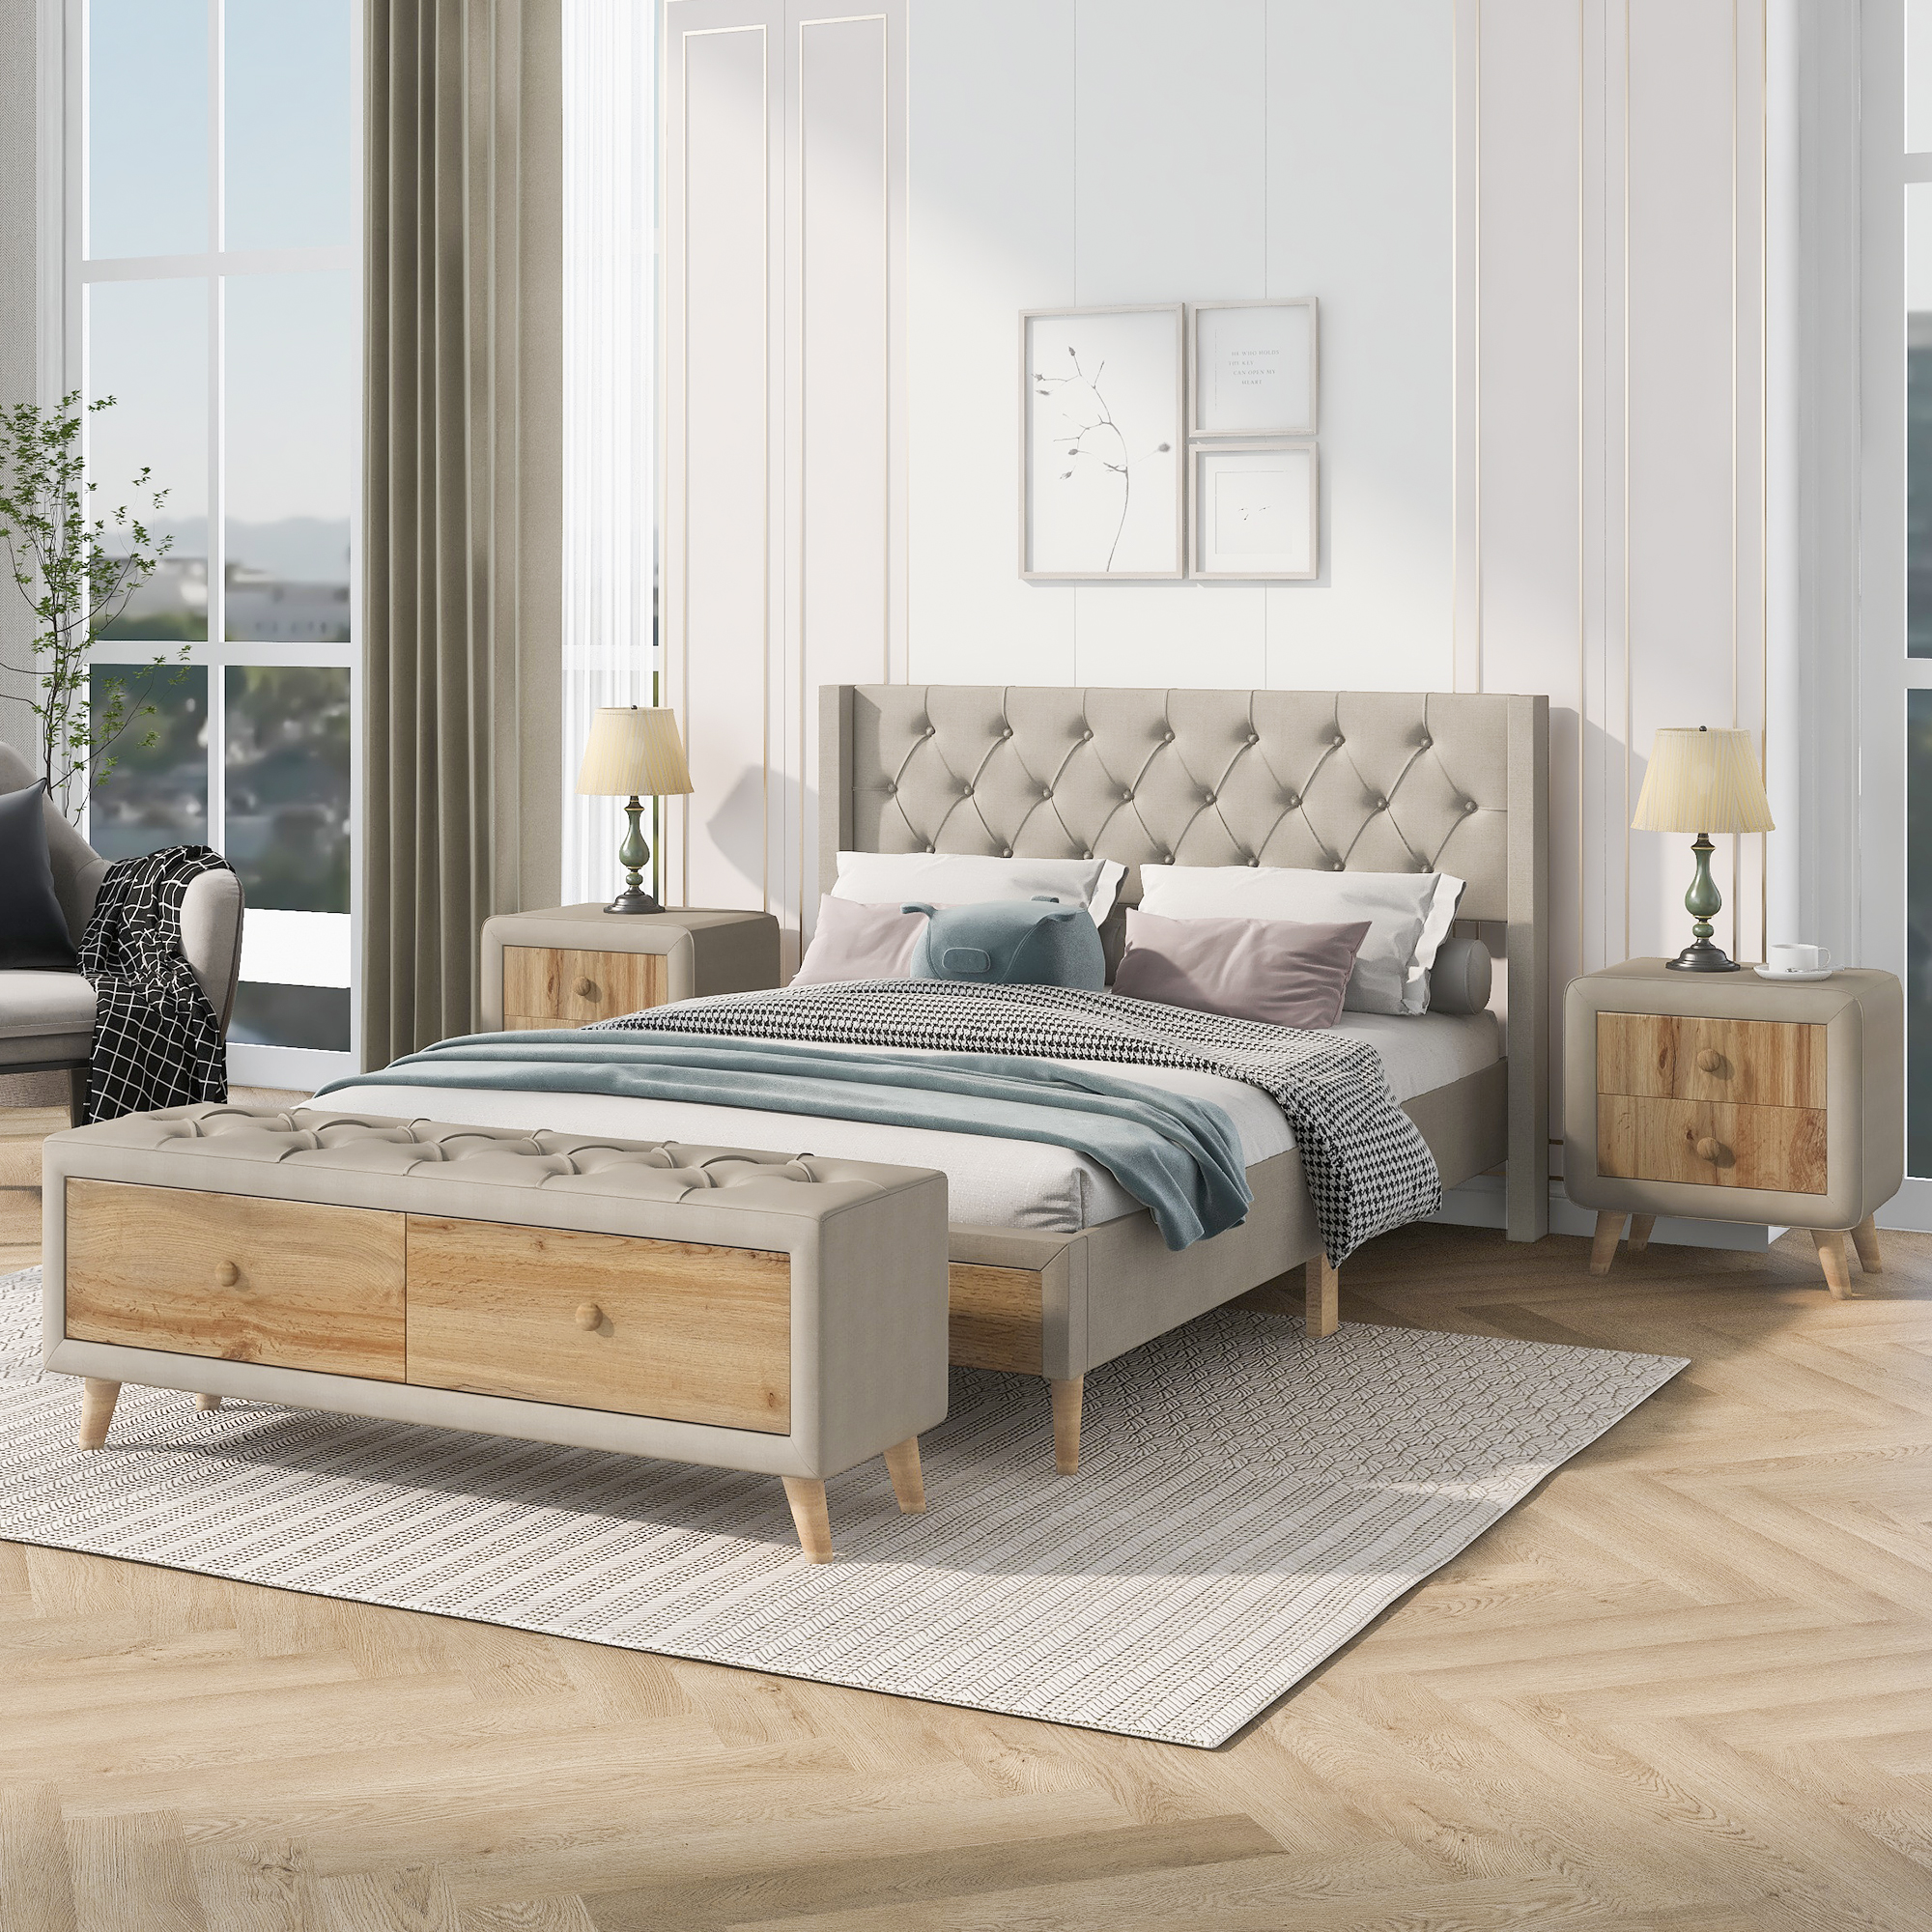 4-Pieces Bedroom Sets, Full Size Platform Bed - HL000005AAA